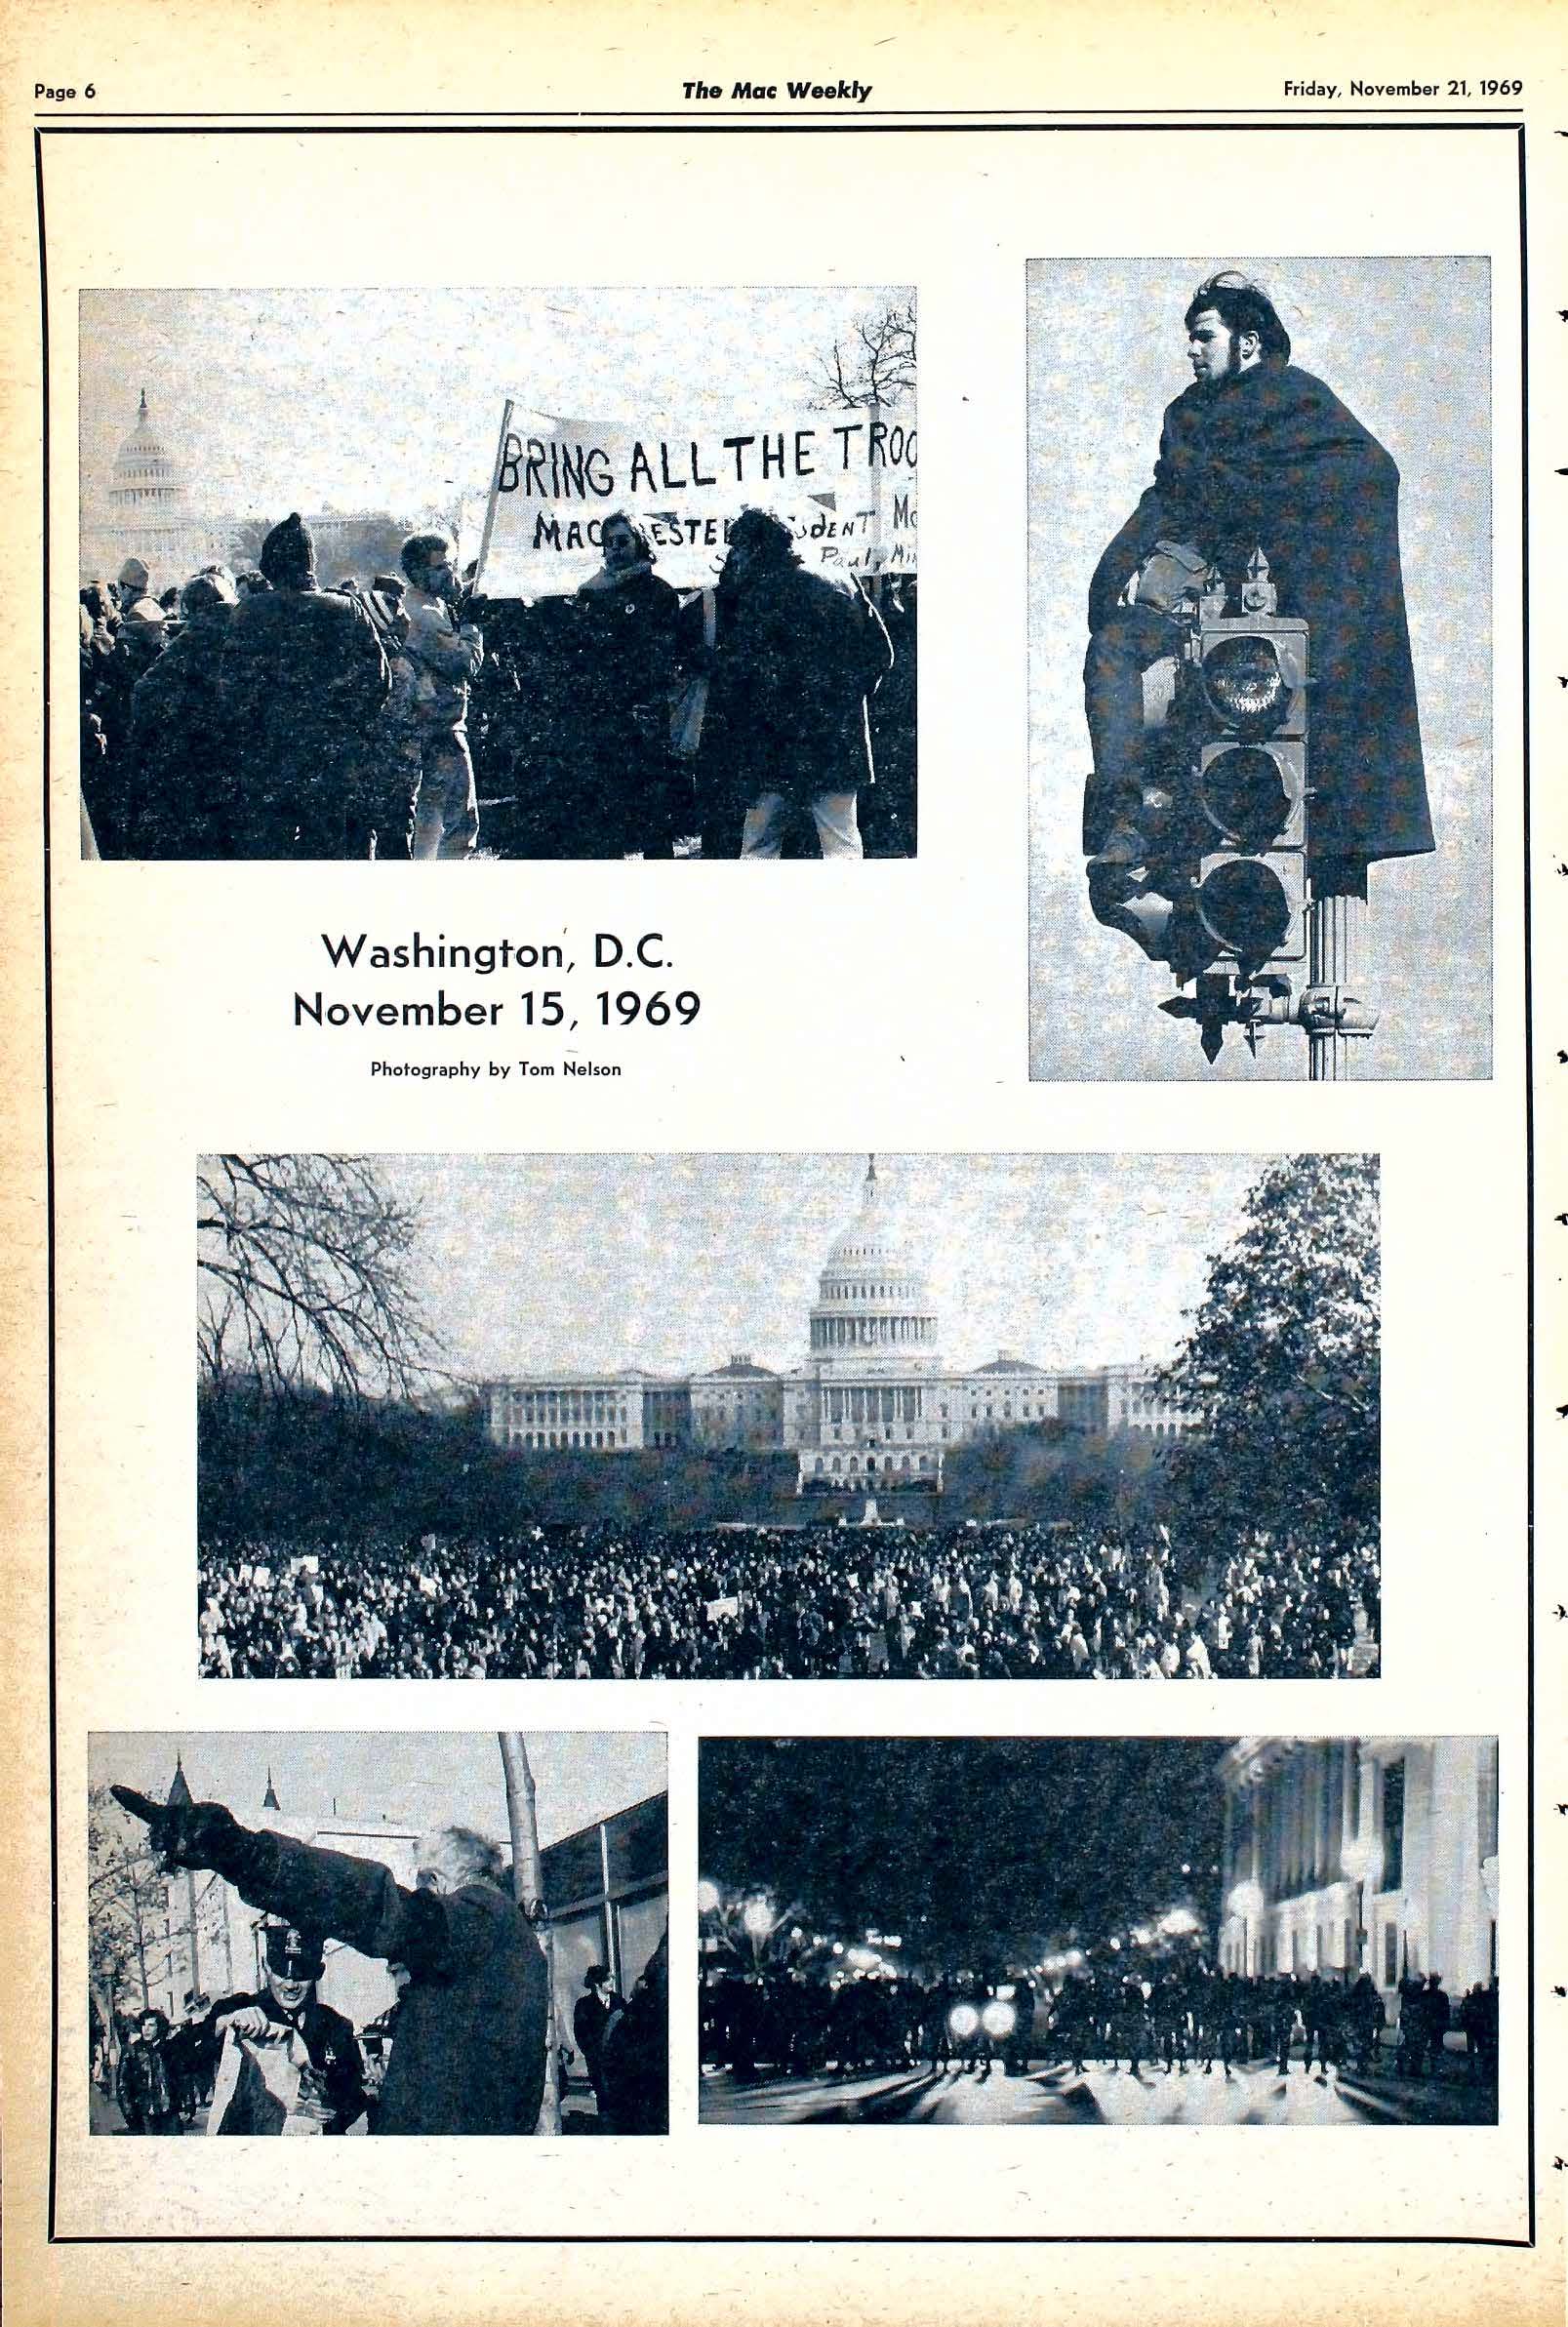 The Mac Weekly, November 21, 1969. Bring Troops Home Now.